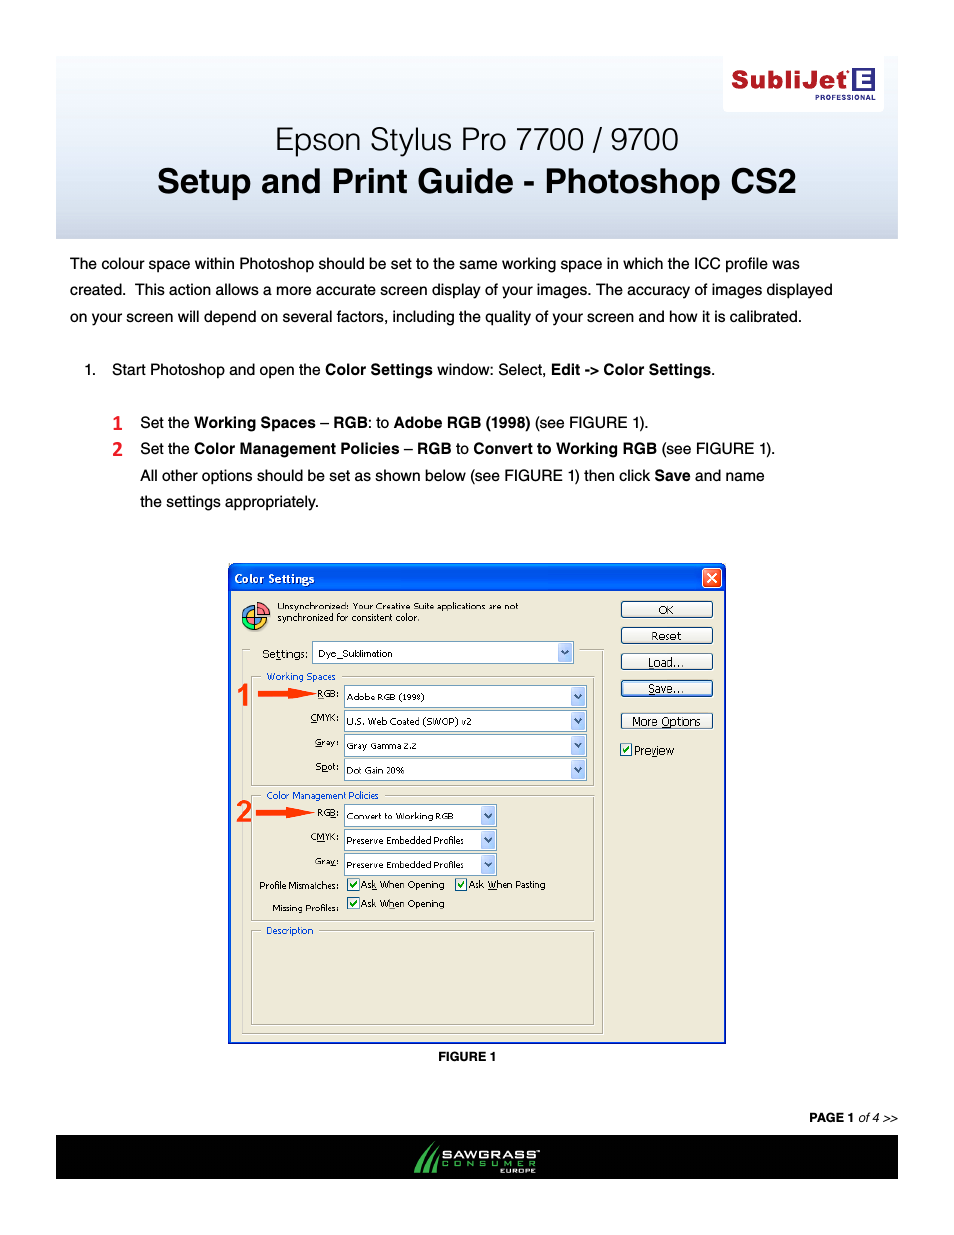 SubliJet E Epson Stylus Pro 7700 (Windows ICC Profile Setup): Print & Setup Guide Photoshop CS2